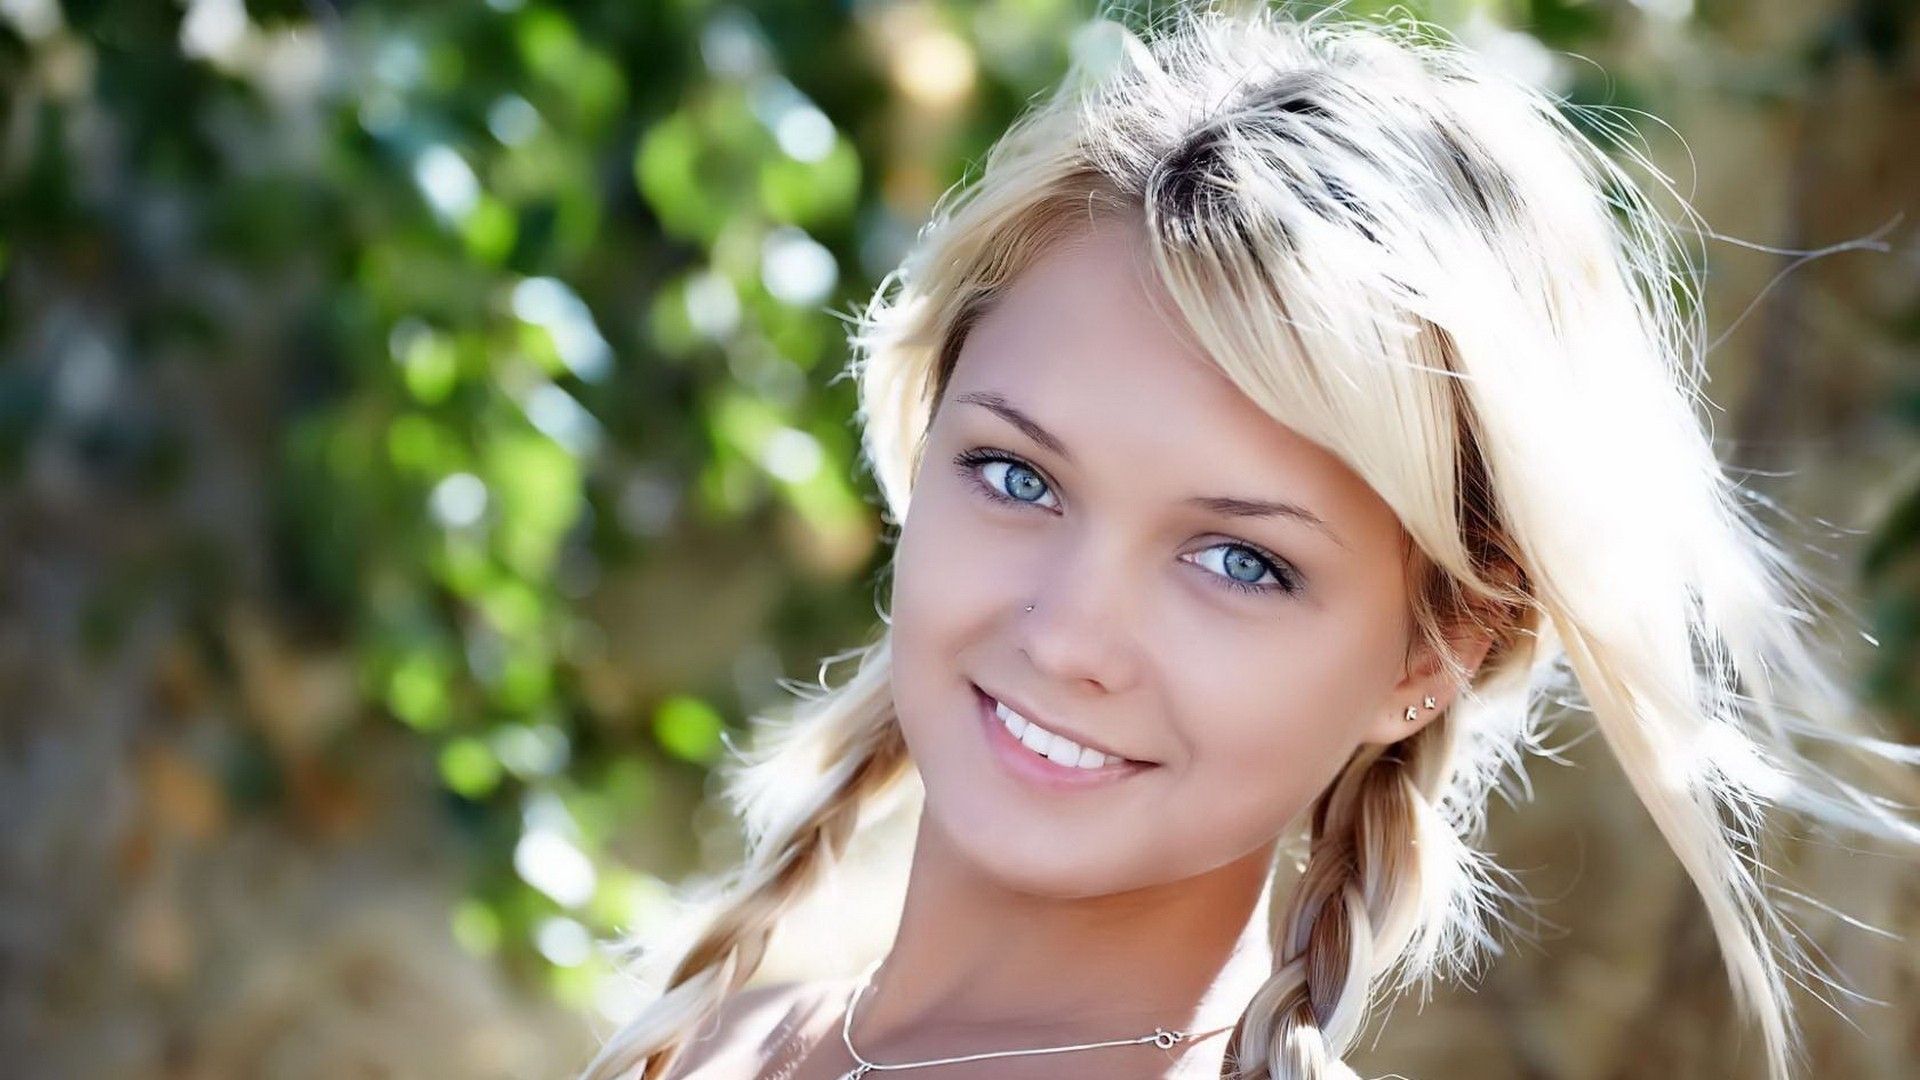 best-blue-eyes-girl-wallpaper-hd-beautiful-background-images.jpg